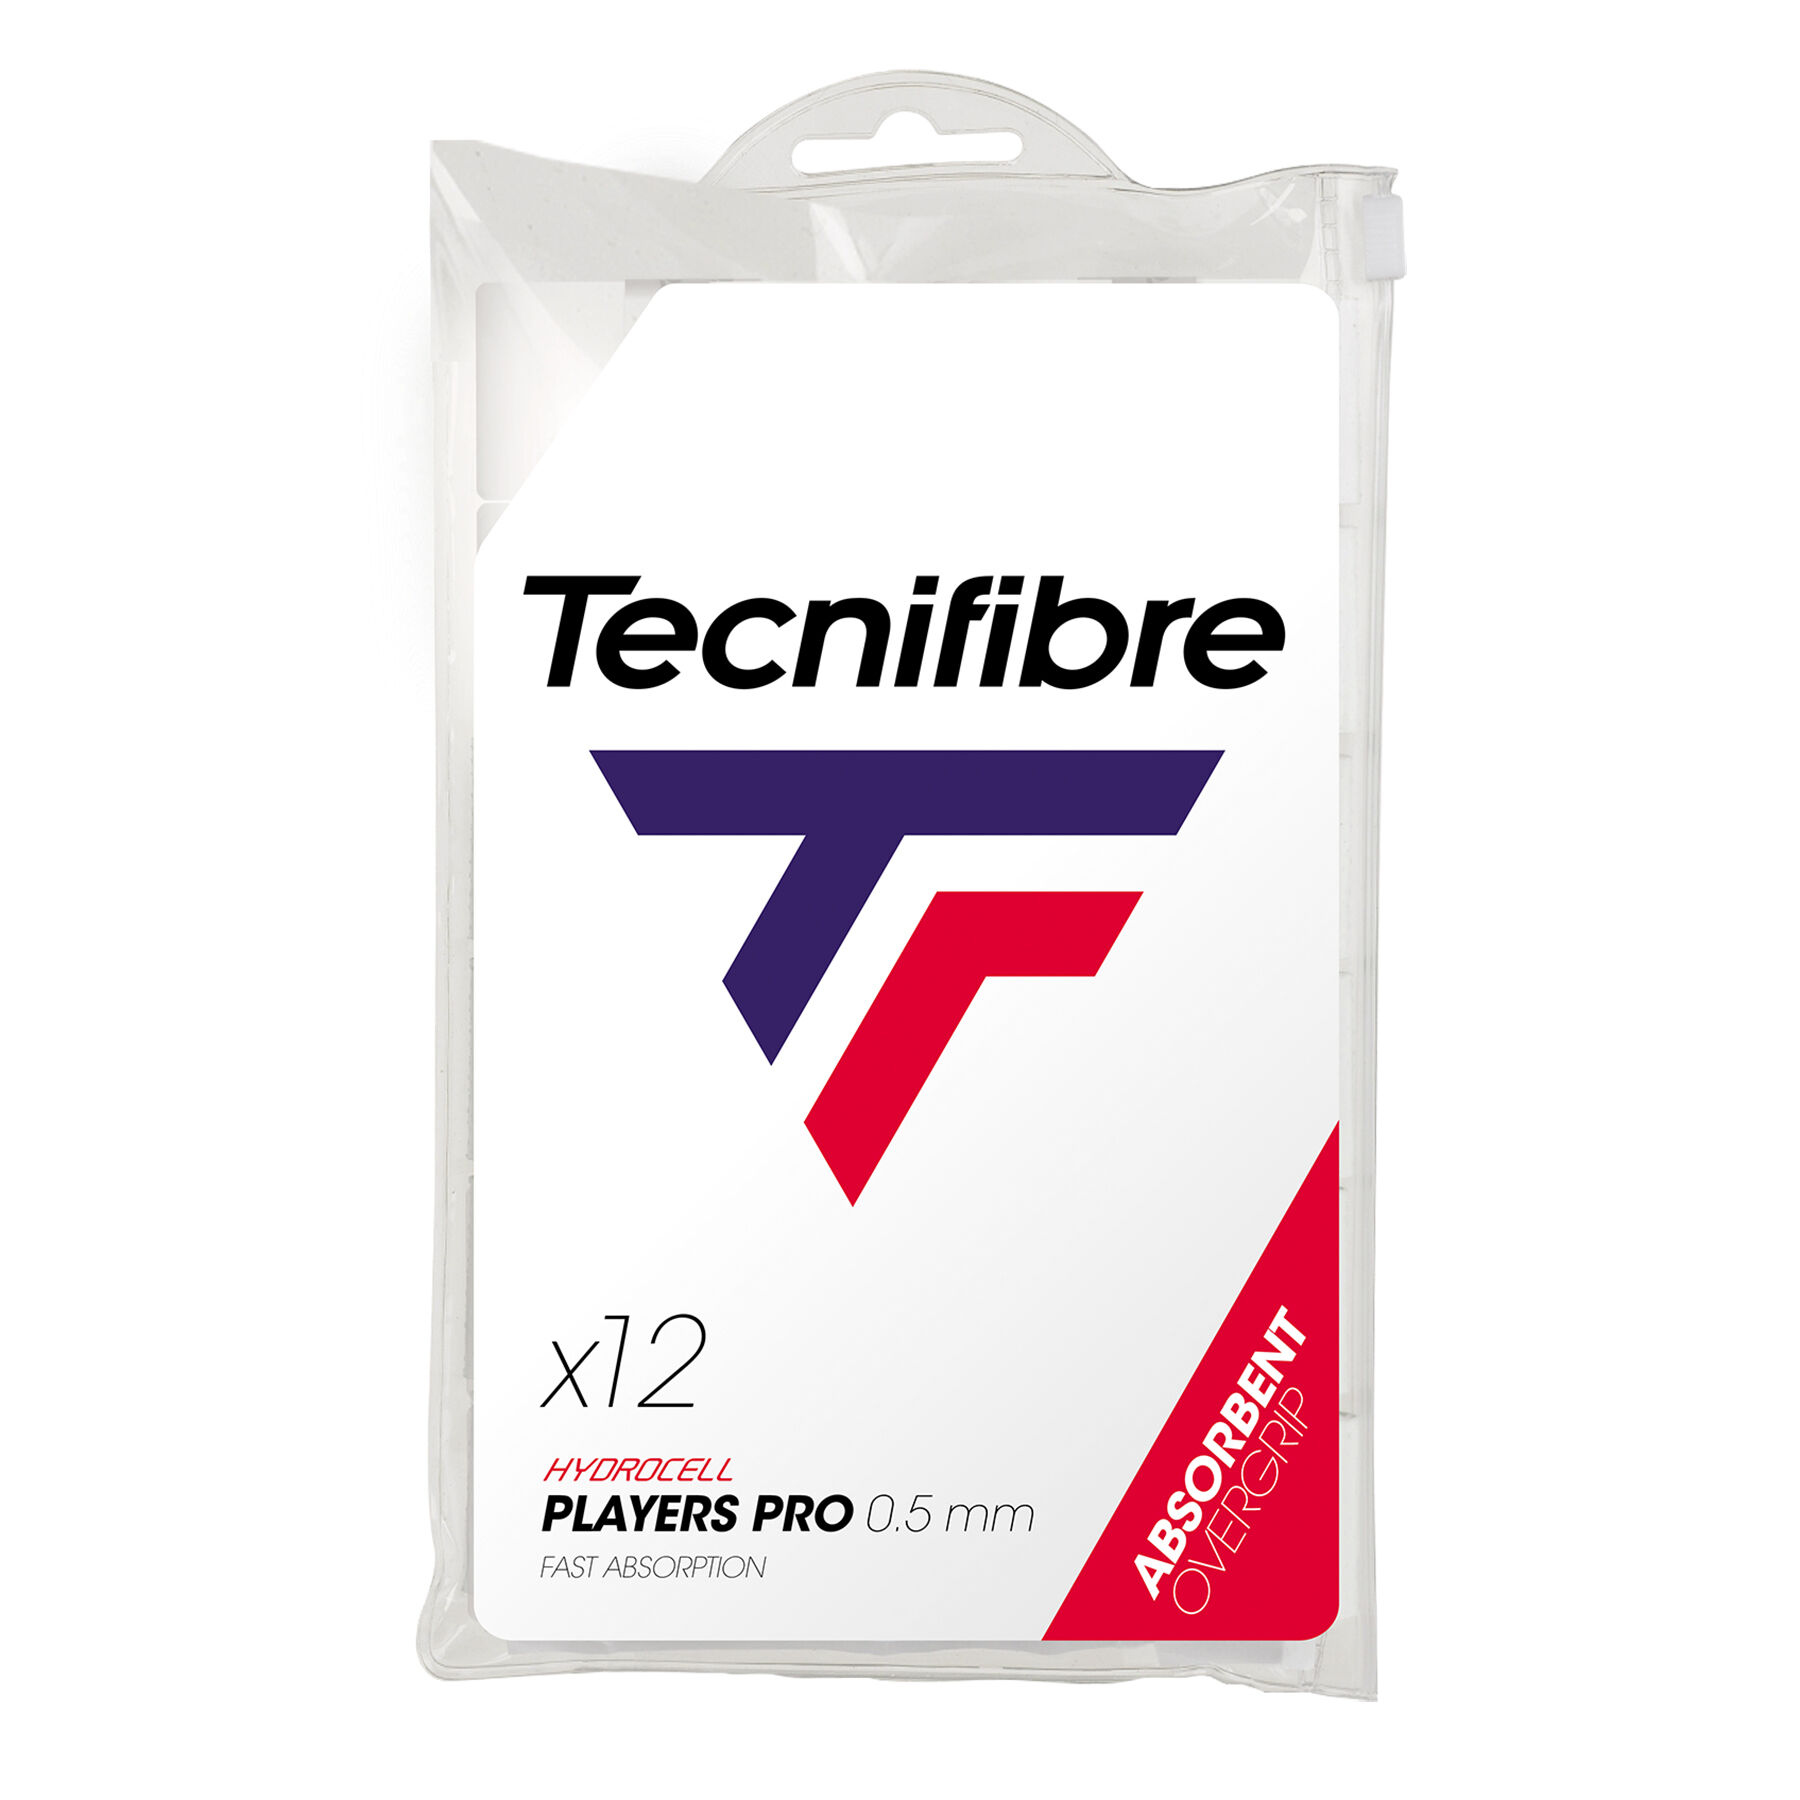 Tennis accessories | Tecnifibre